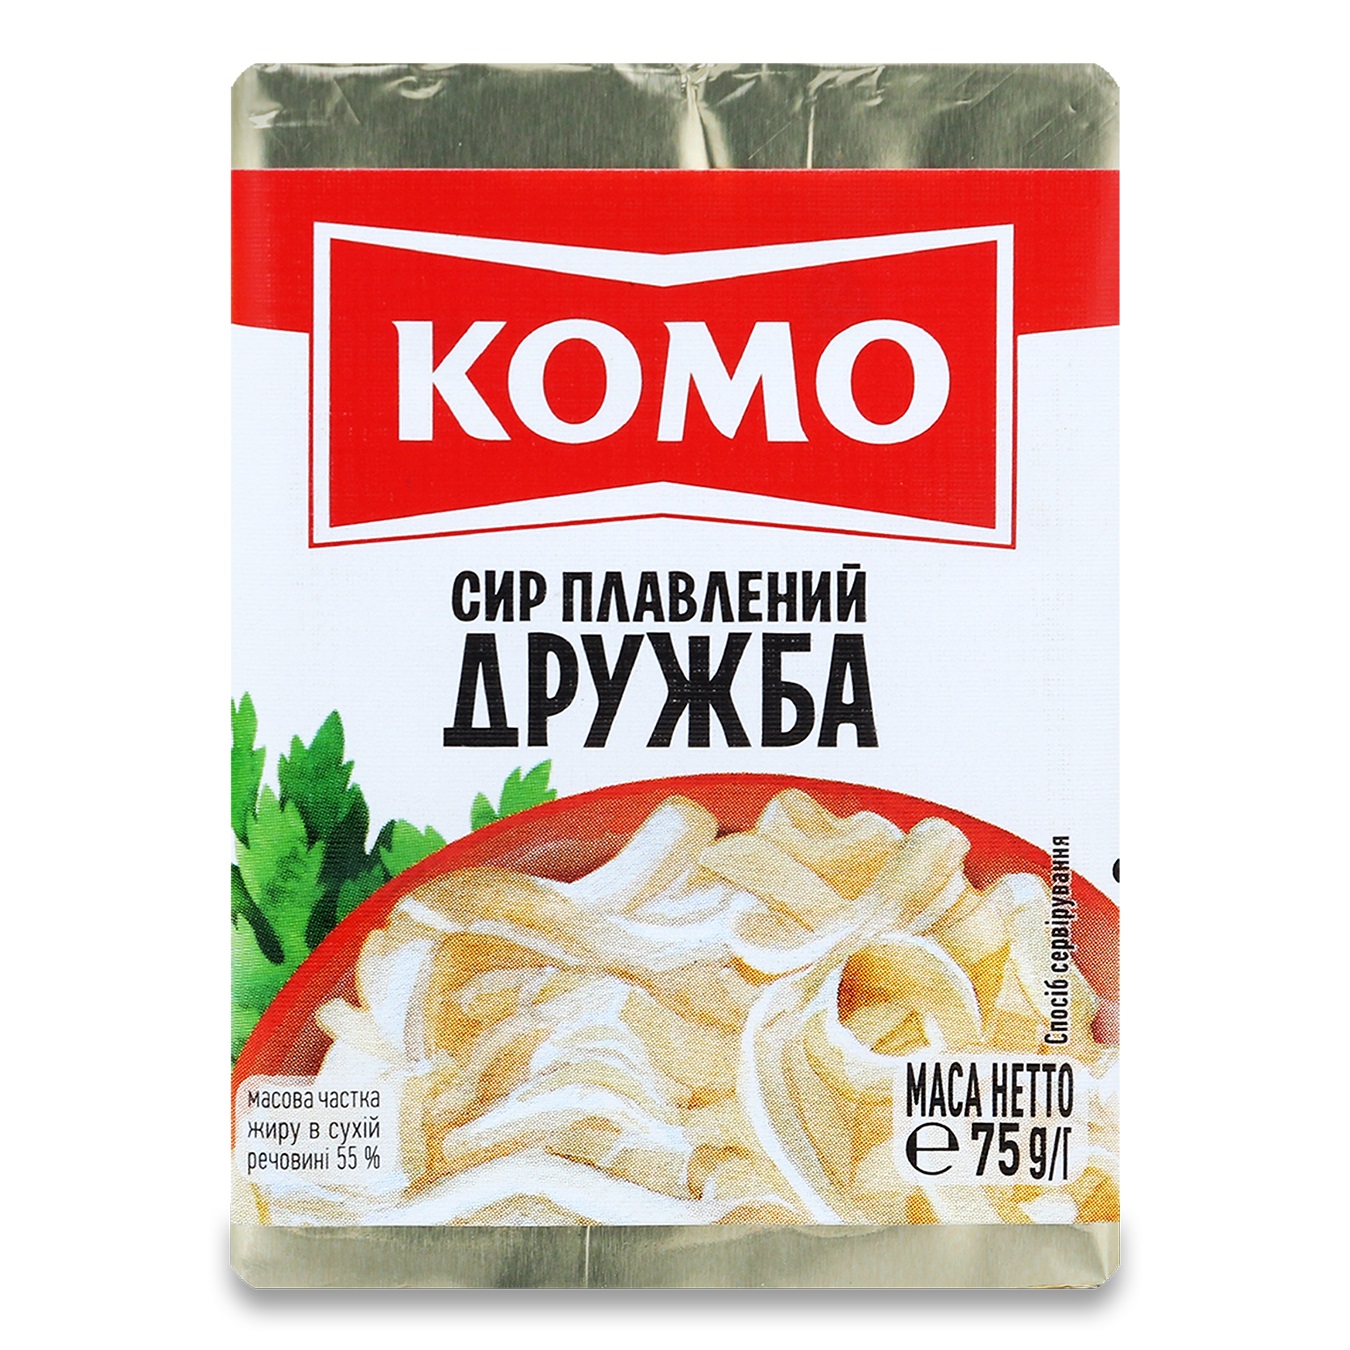 Komo Druzhba Processed Cheese 55% 75g